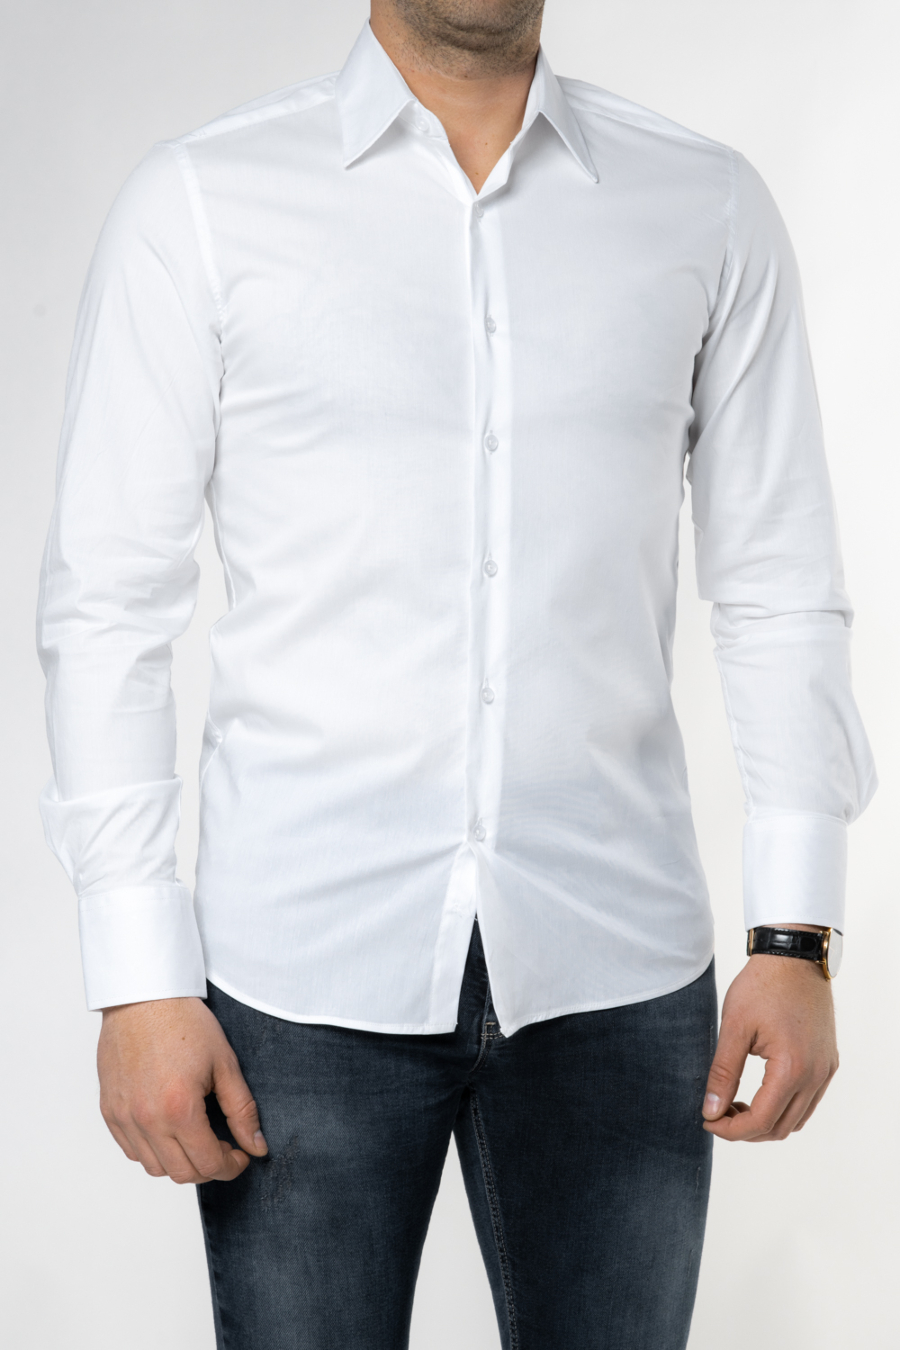 Moška srajca NS7179-15, bela